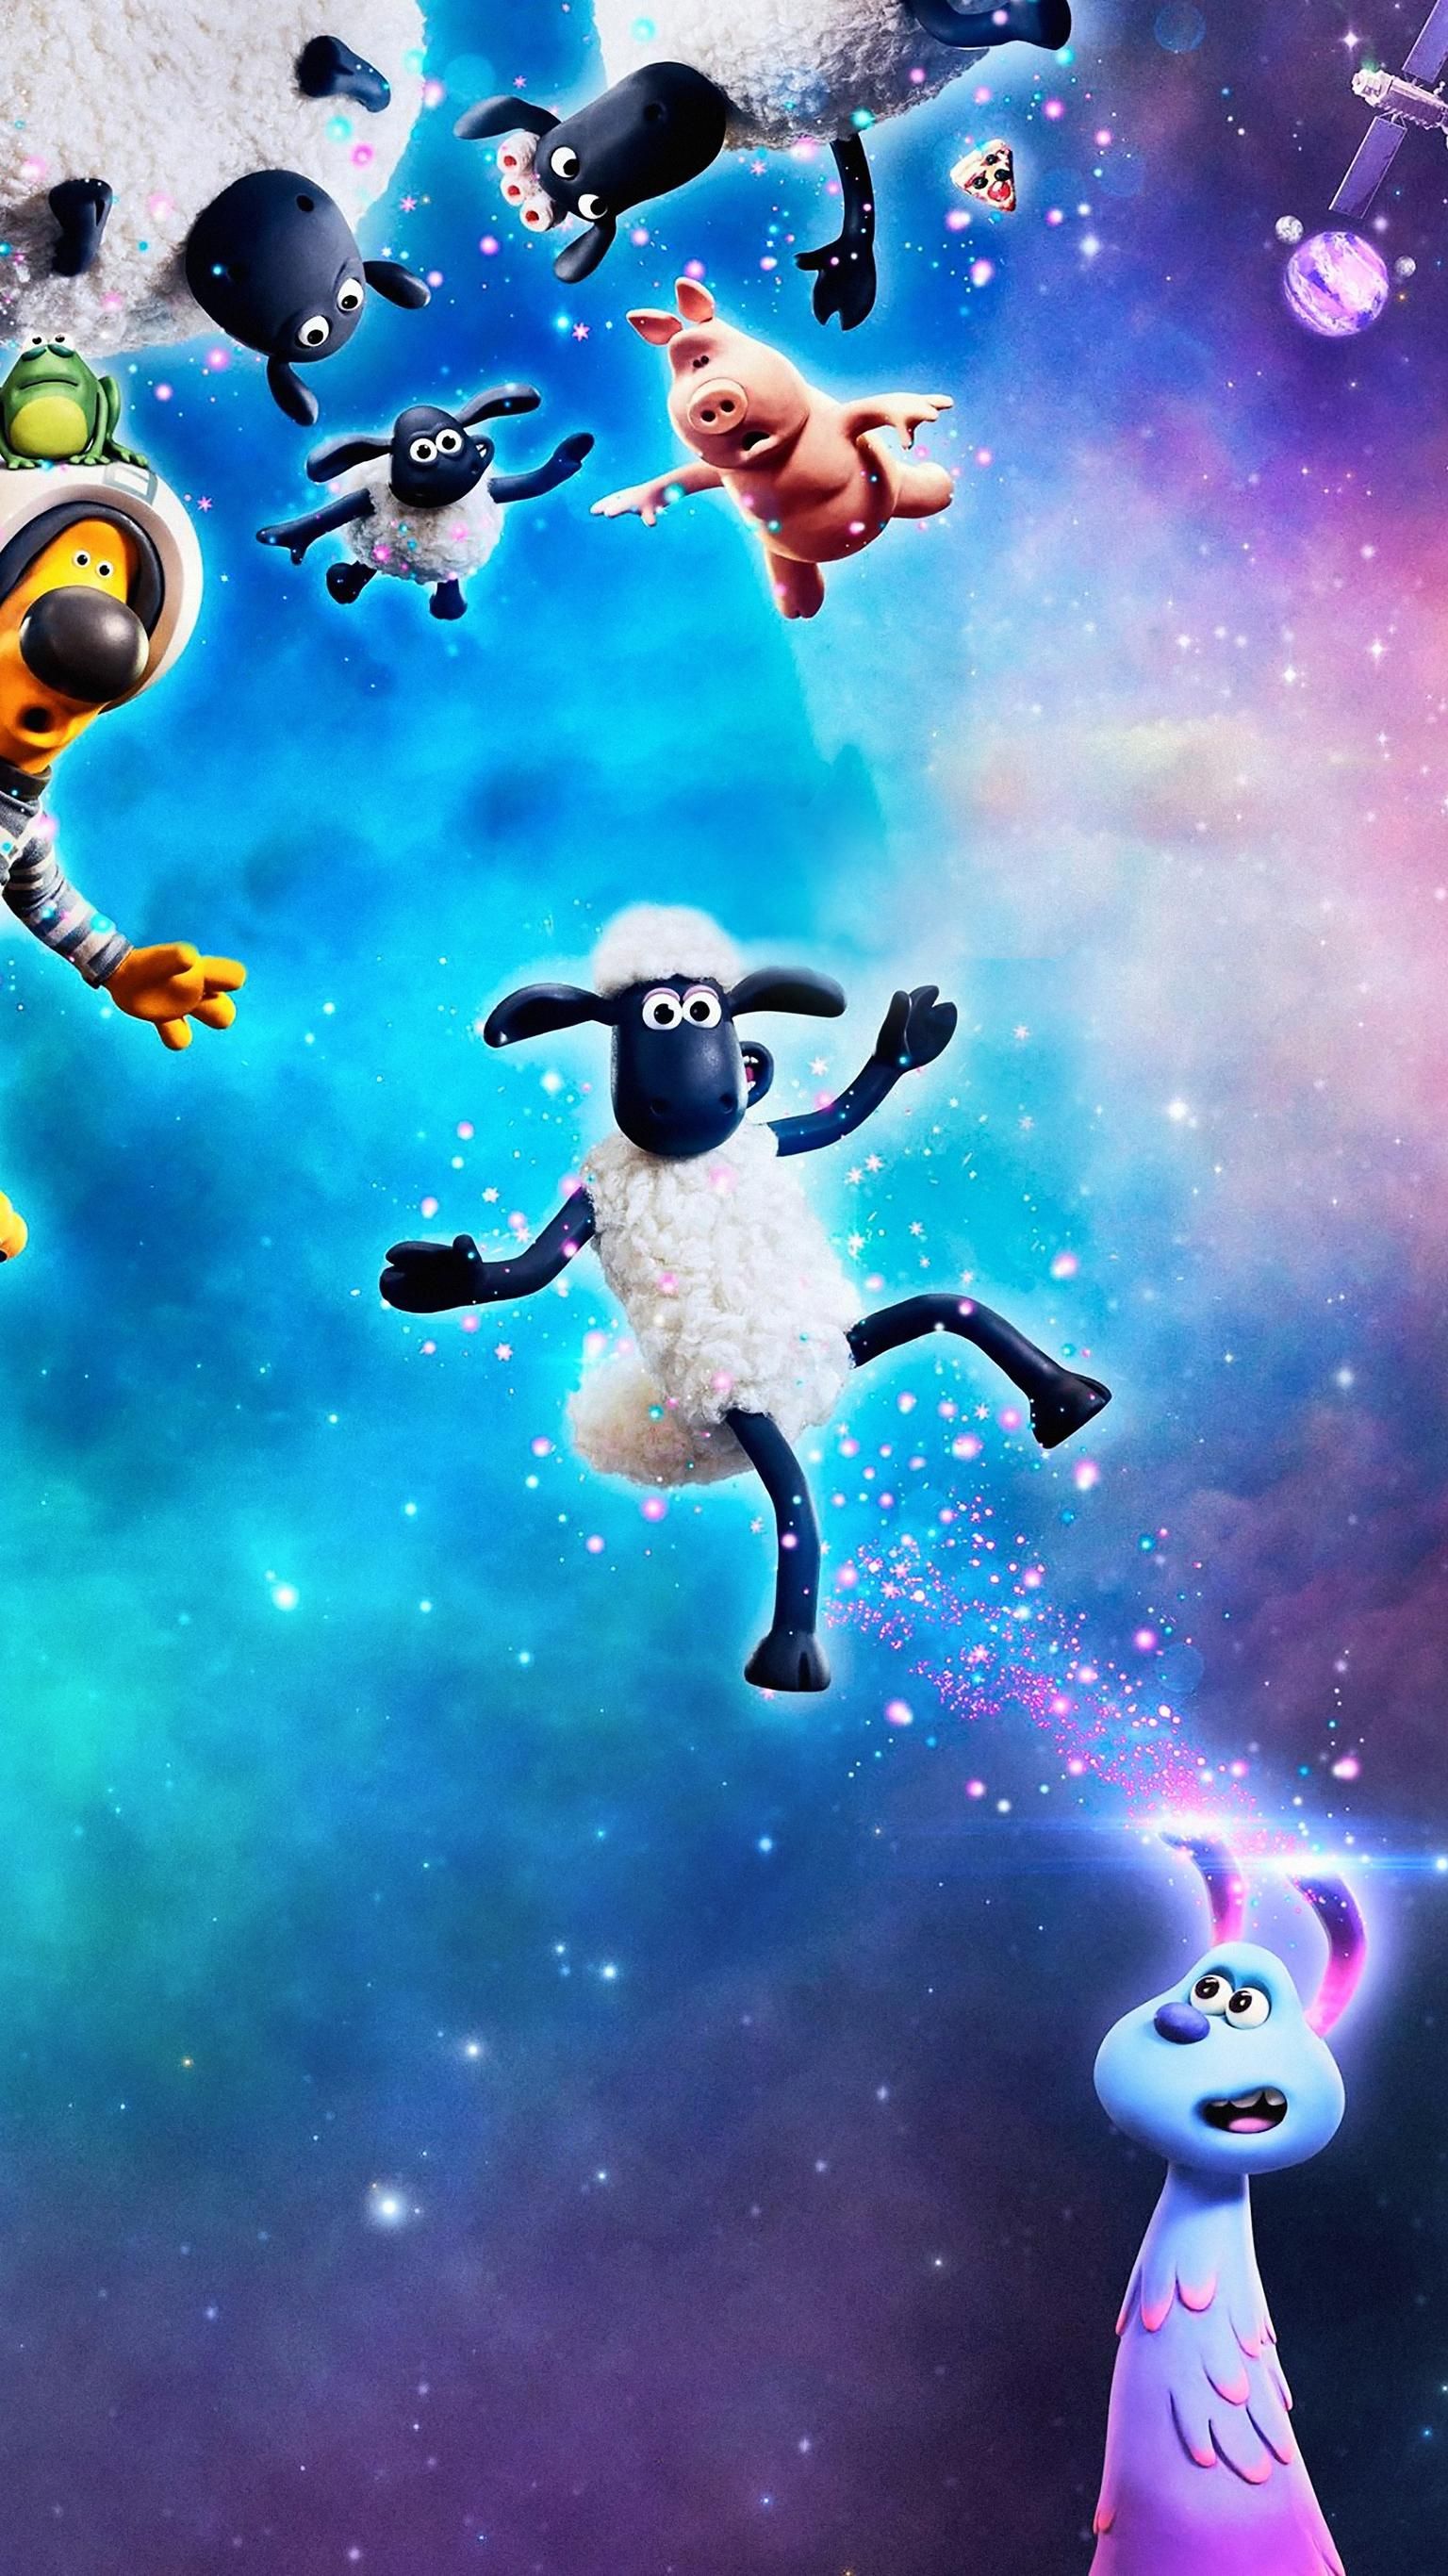 Shaun The Sheep Movie Wallpapers